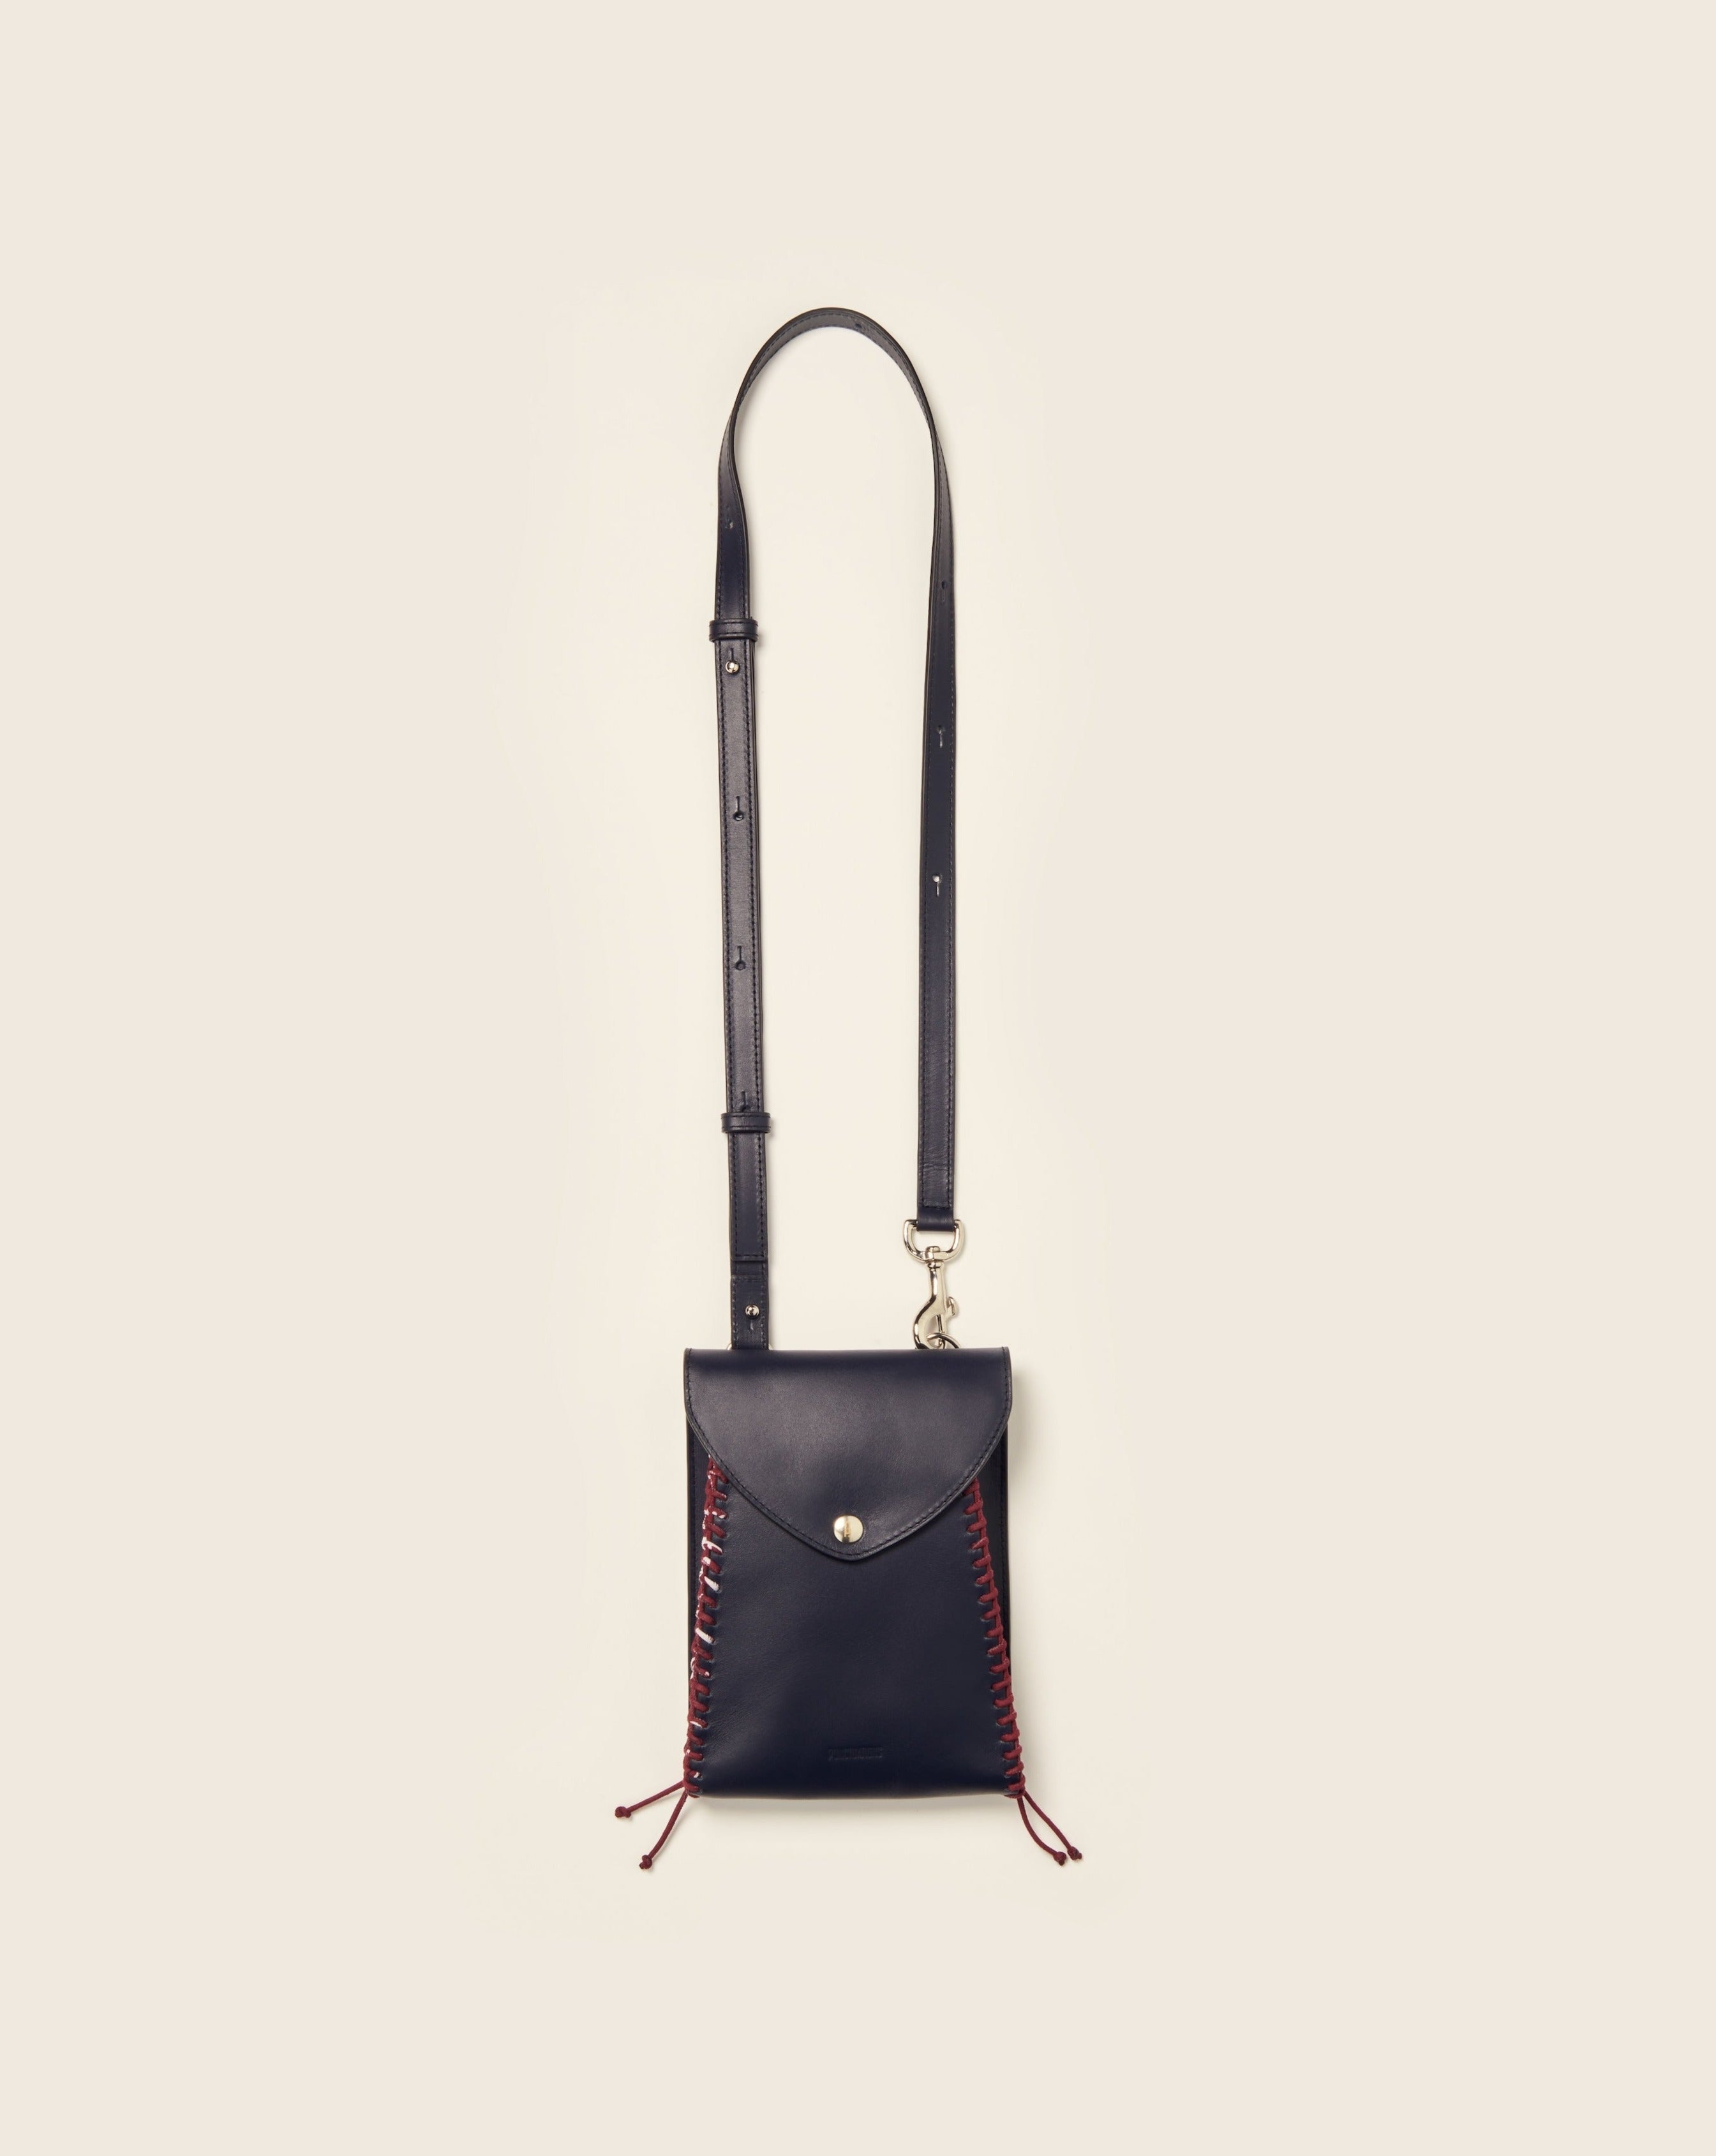 NANGA - Envelope bag - Navy leather & Bandana burgundy